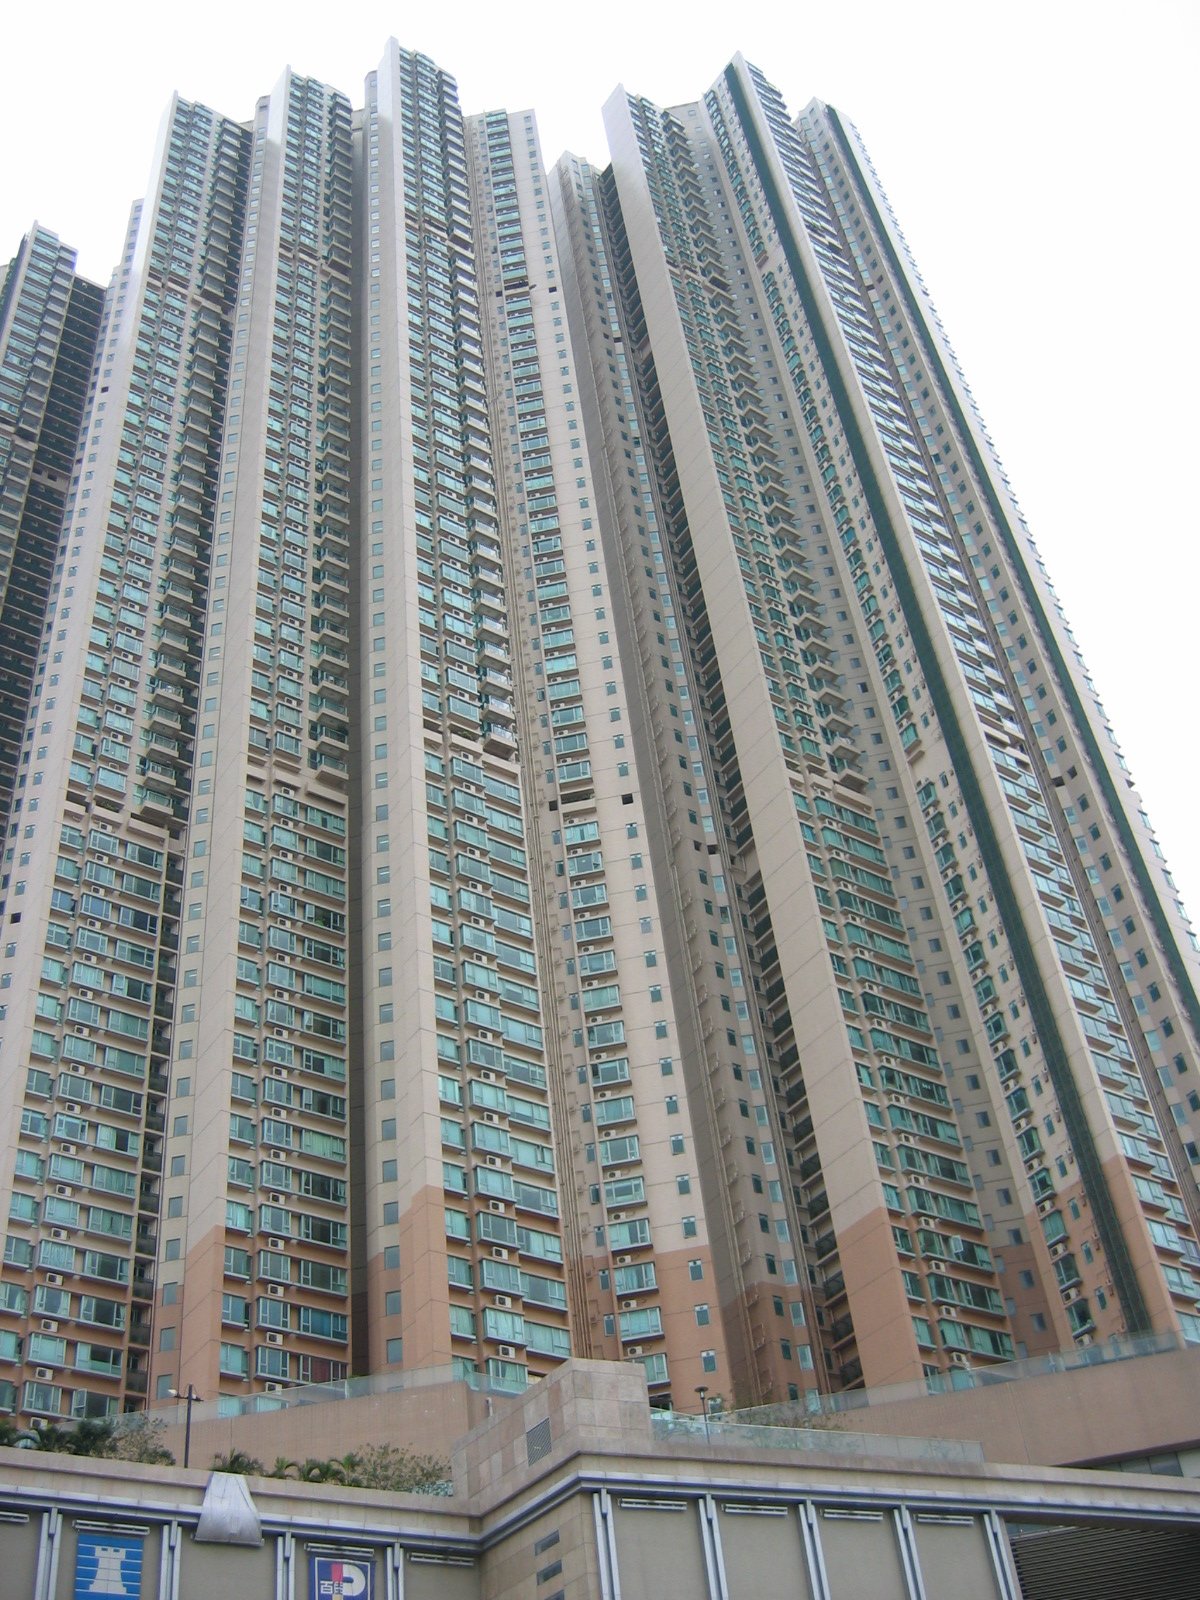 File:HK-towerblock-sj.jpg - Wikimedia Commons